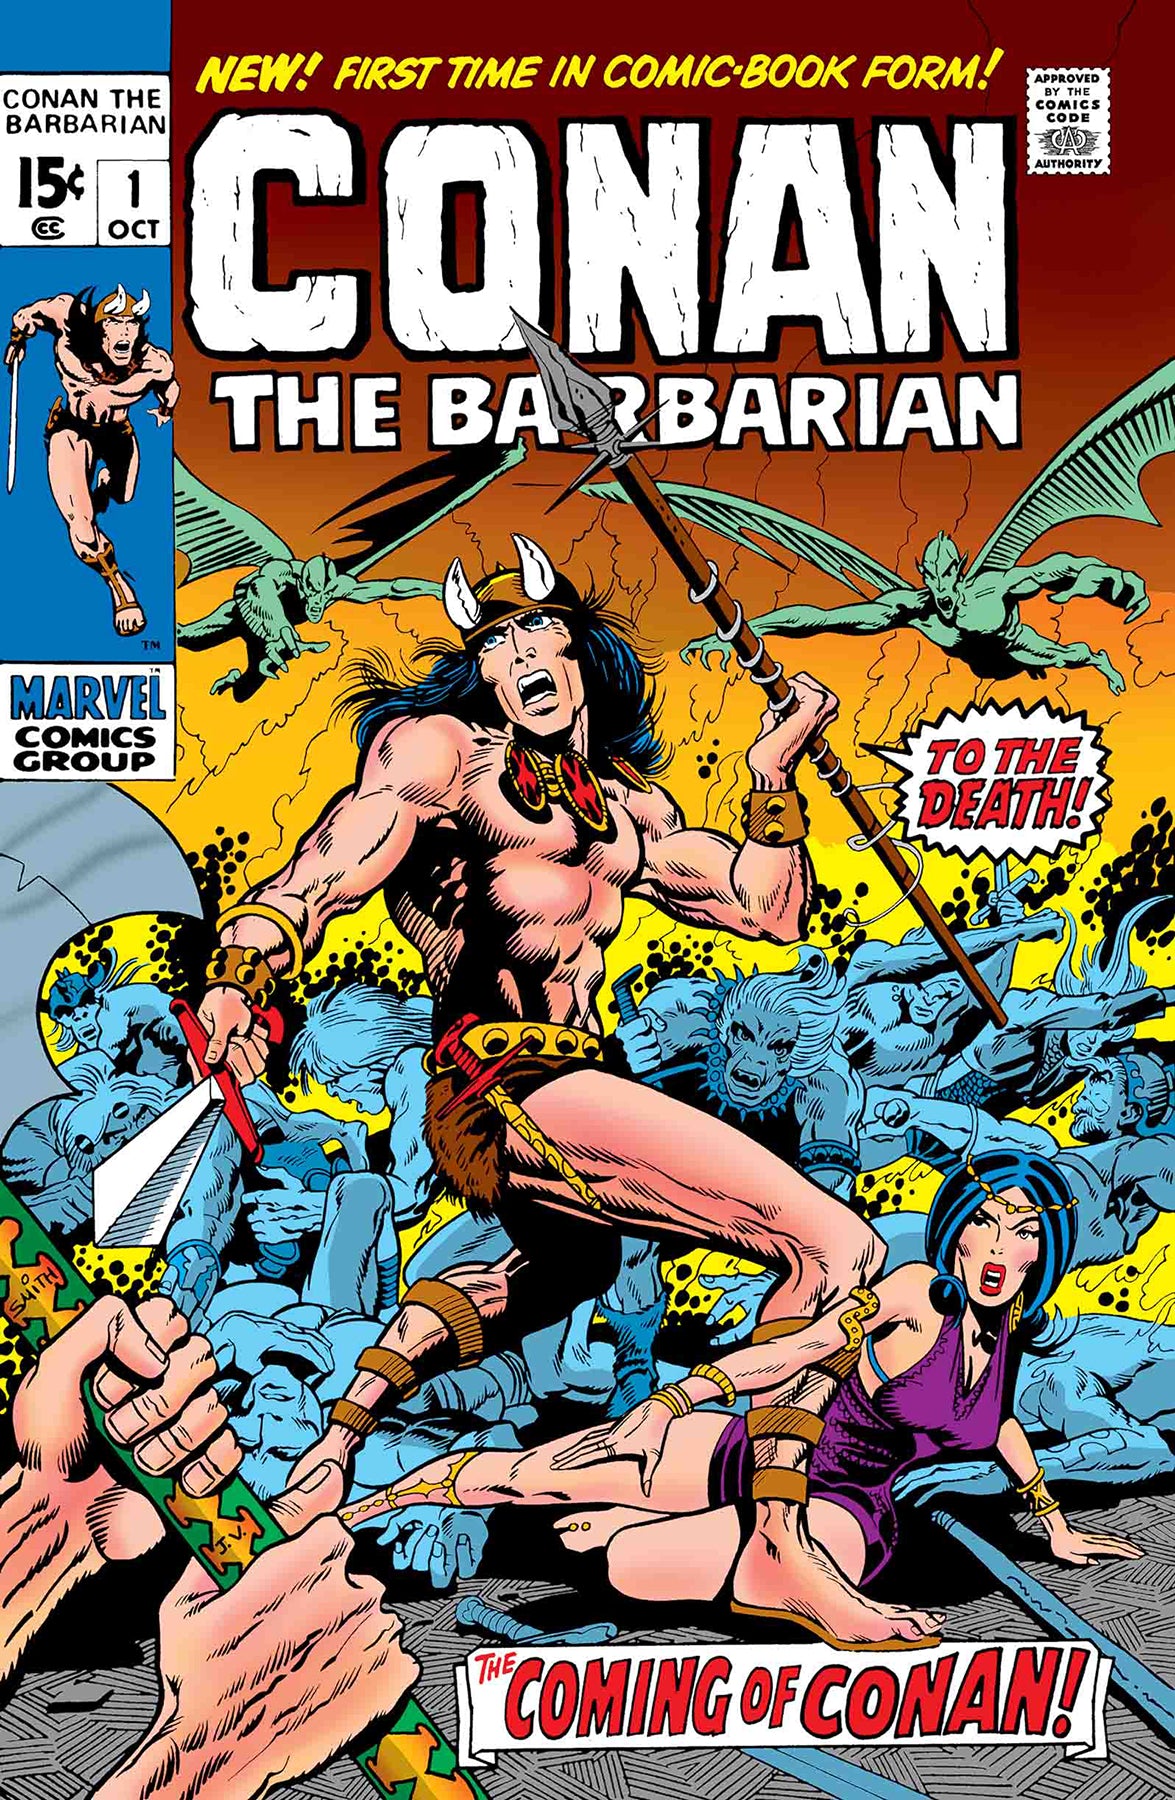 TRUE BELIEVERS CONAN THE BARBARIAN #1 | L.A. Mood Comics and Games